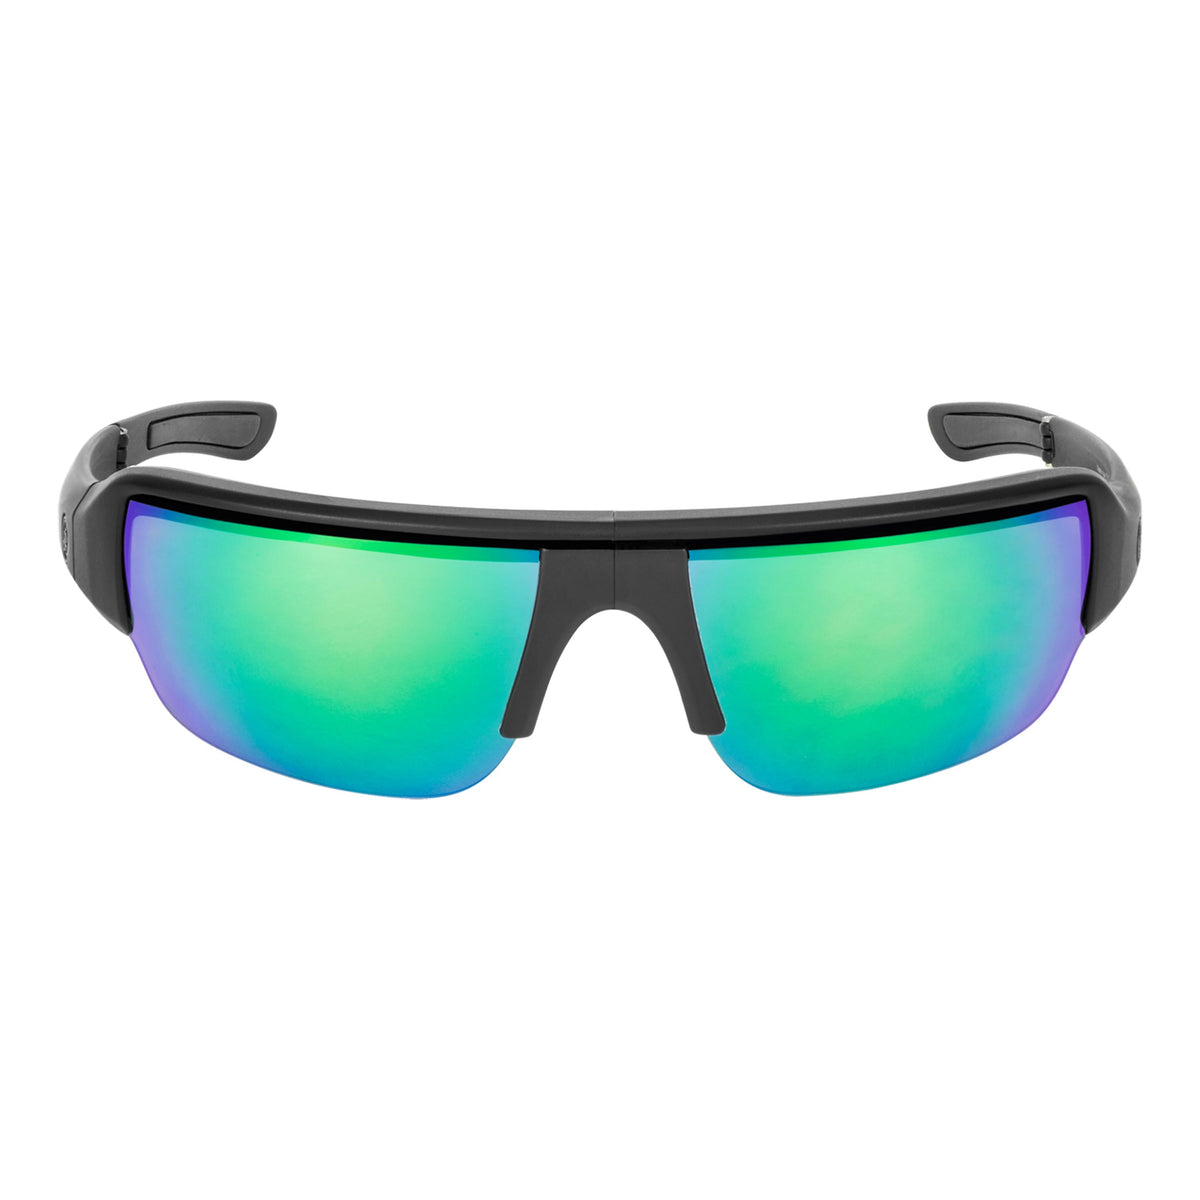 Popticals, Premium Compact Sunglasses, PopGun, 010010-BMEN, Polarized Sunglasses, Matte Black Frame, Gray Lenses w/Green Mirror, Front View